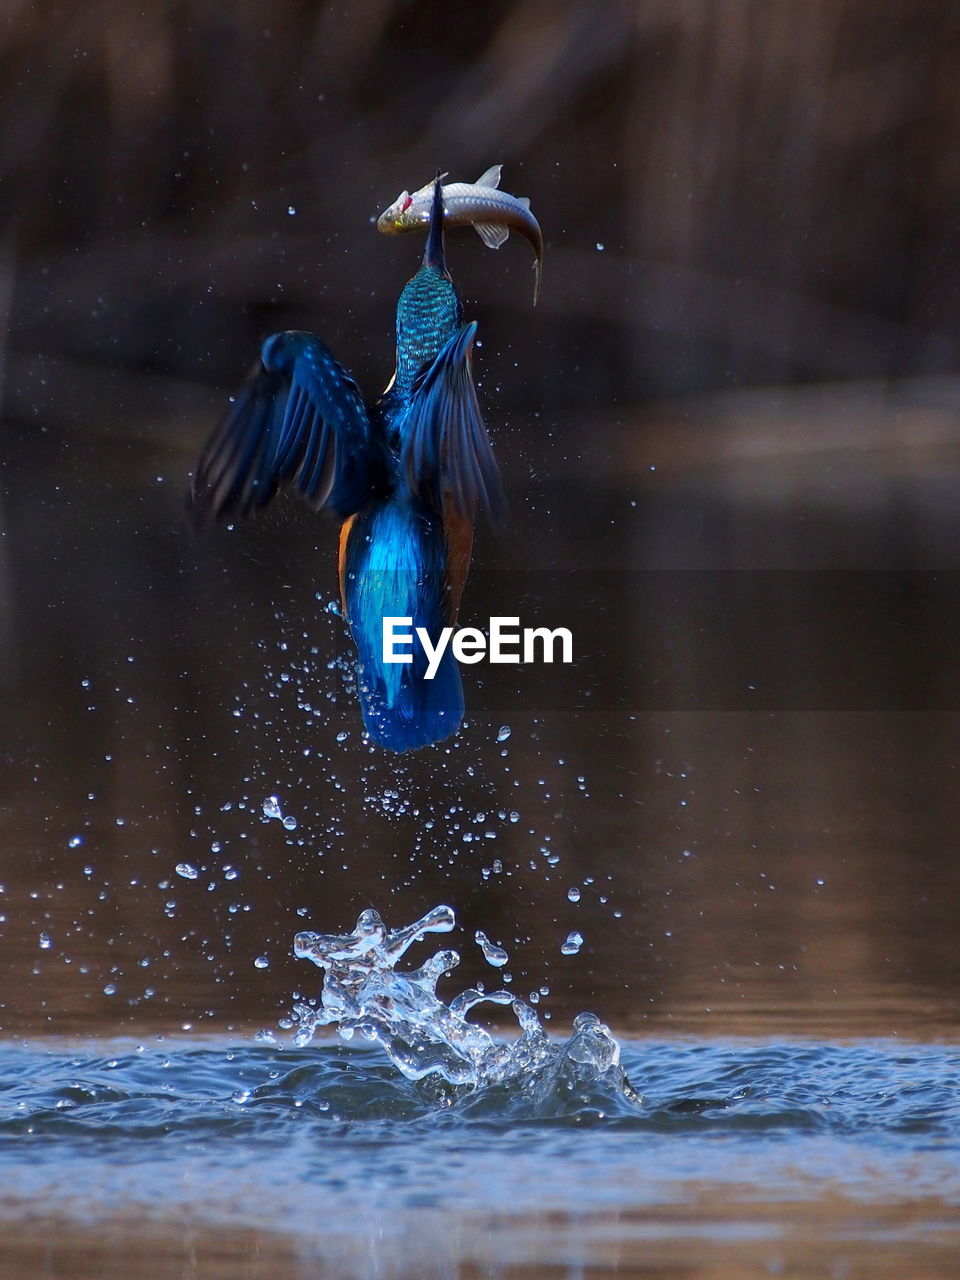 View of bird in water